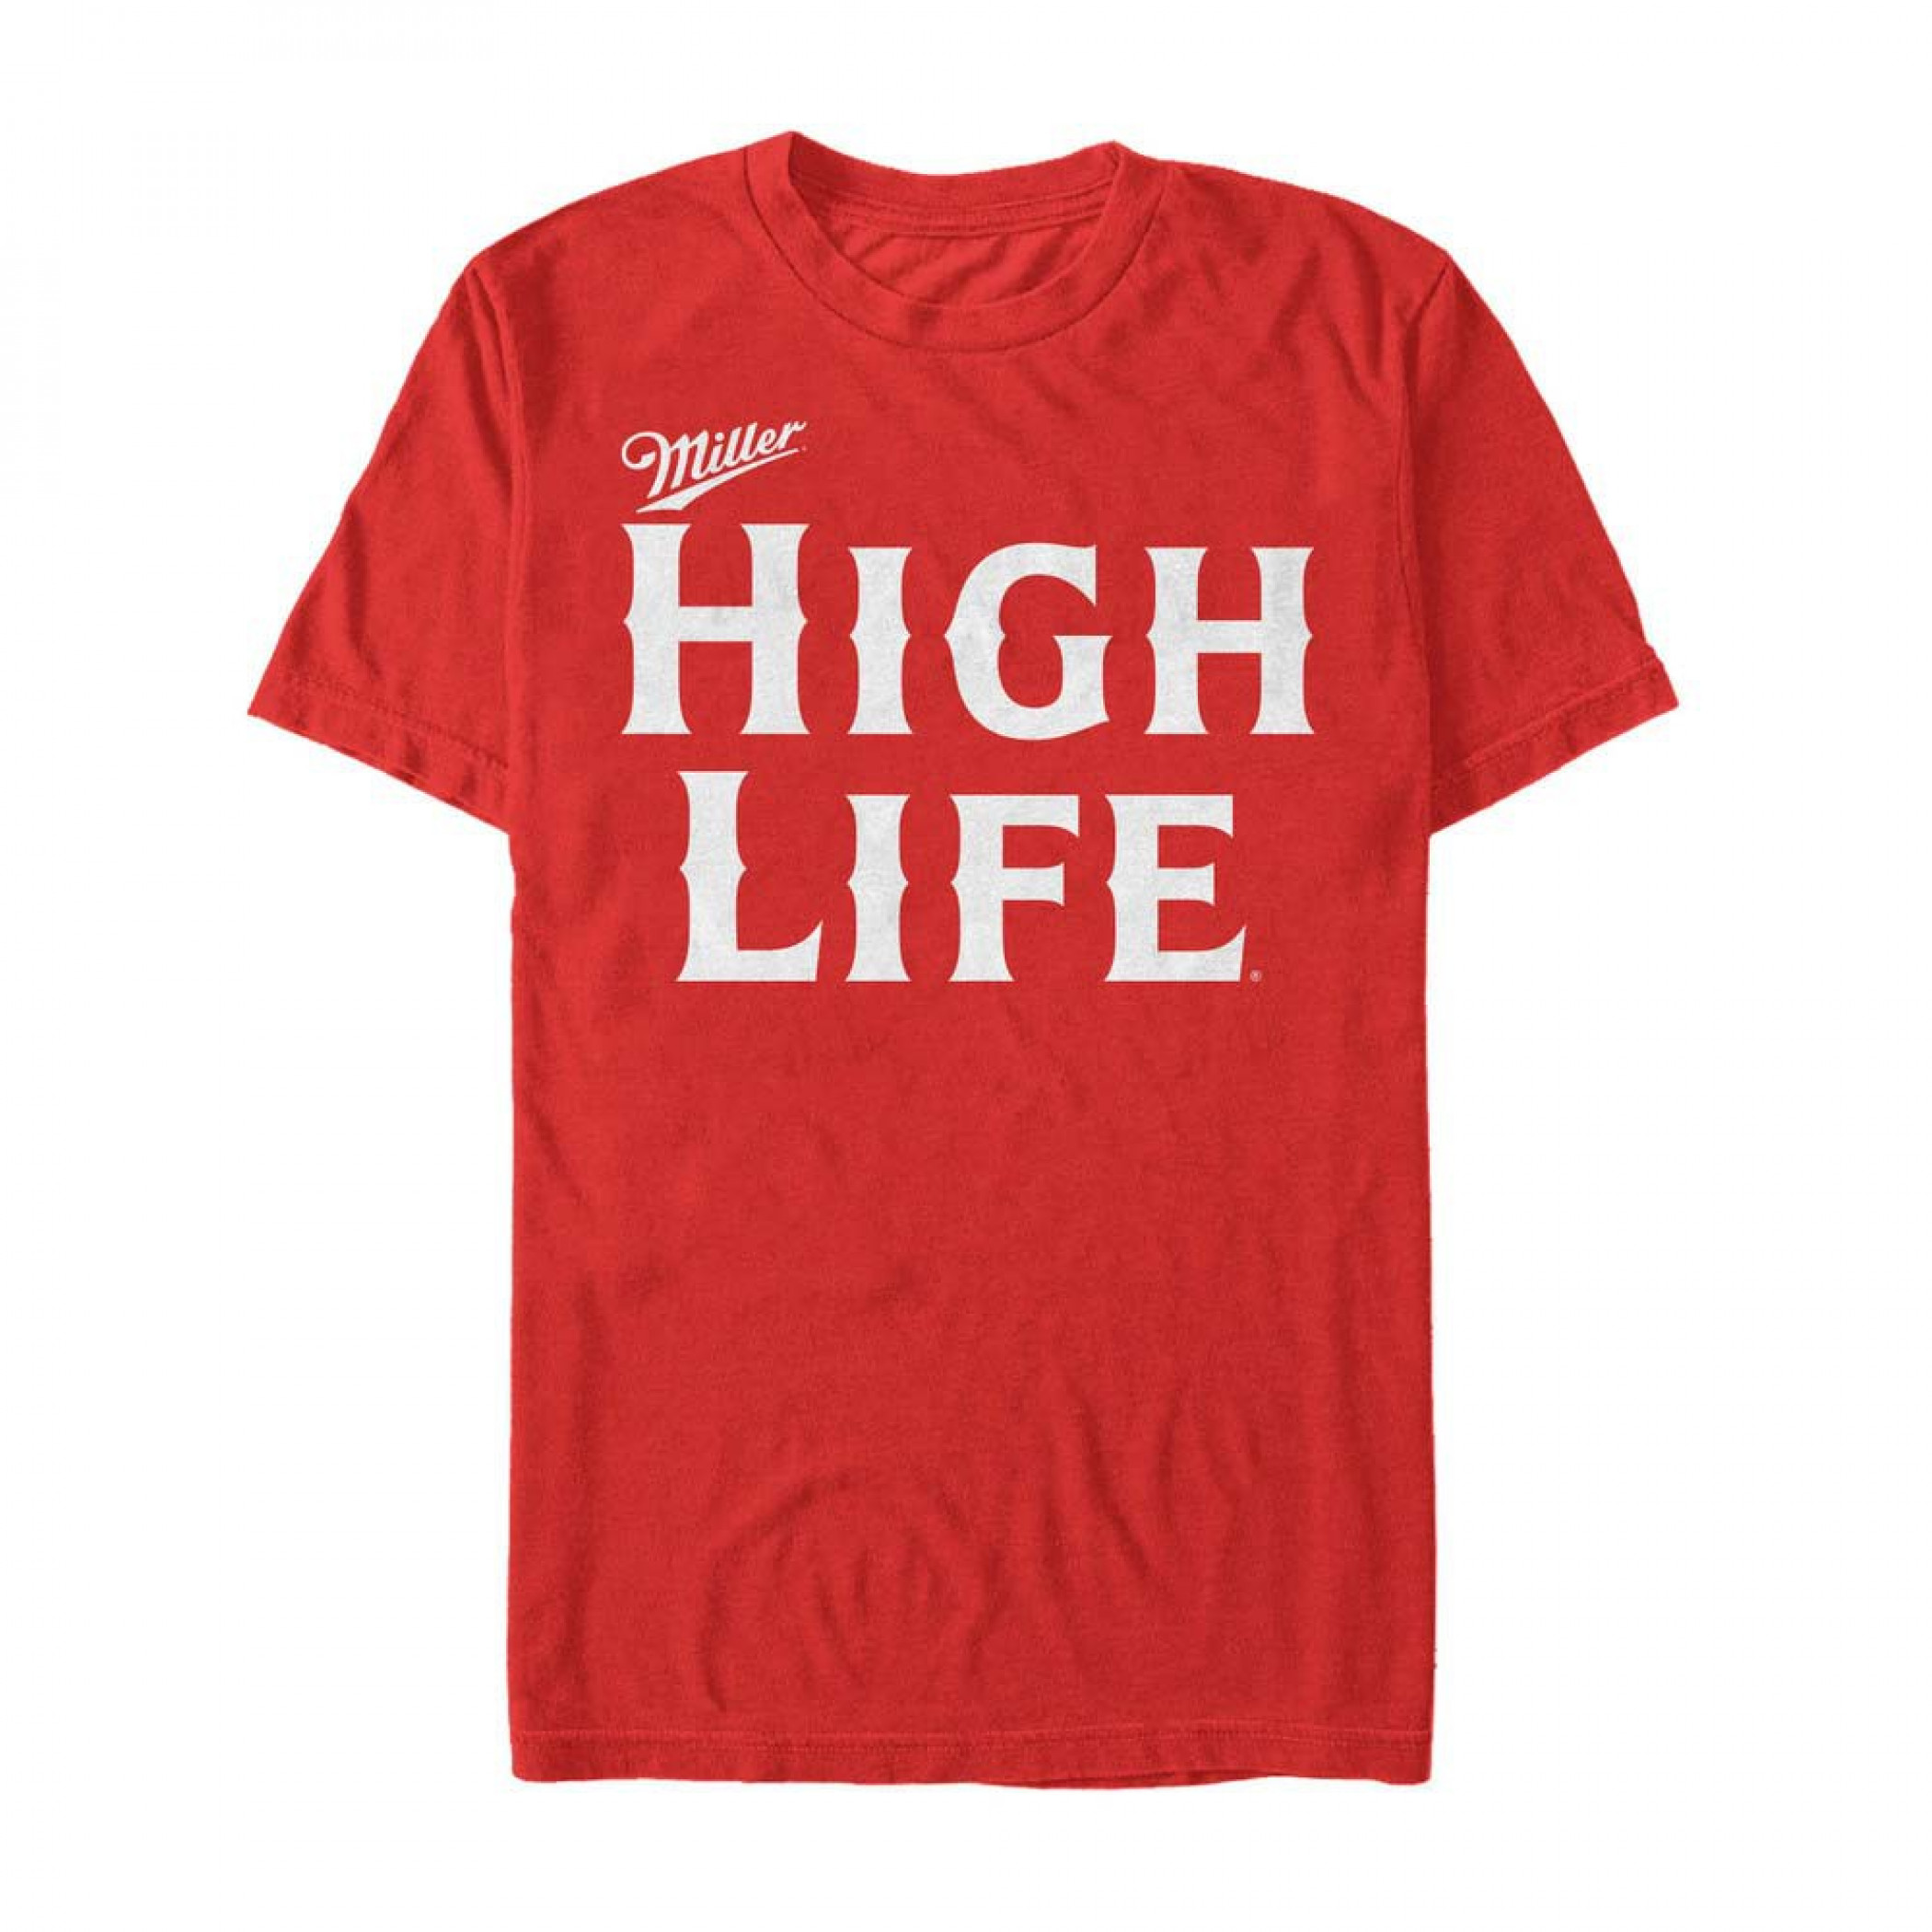 Hi is life. High Life футболка. Higher Life футболка. Target Highlife футболка. Футболка лайф энд Скотт.